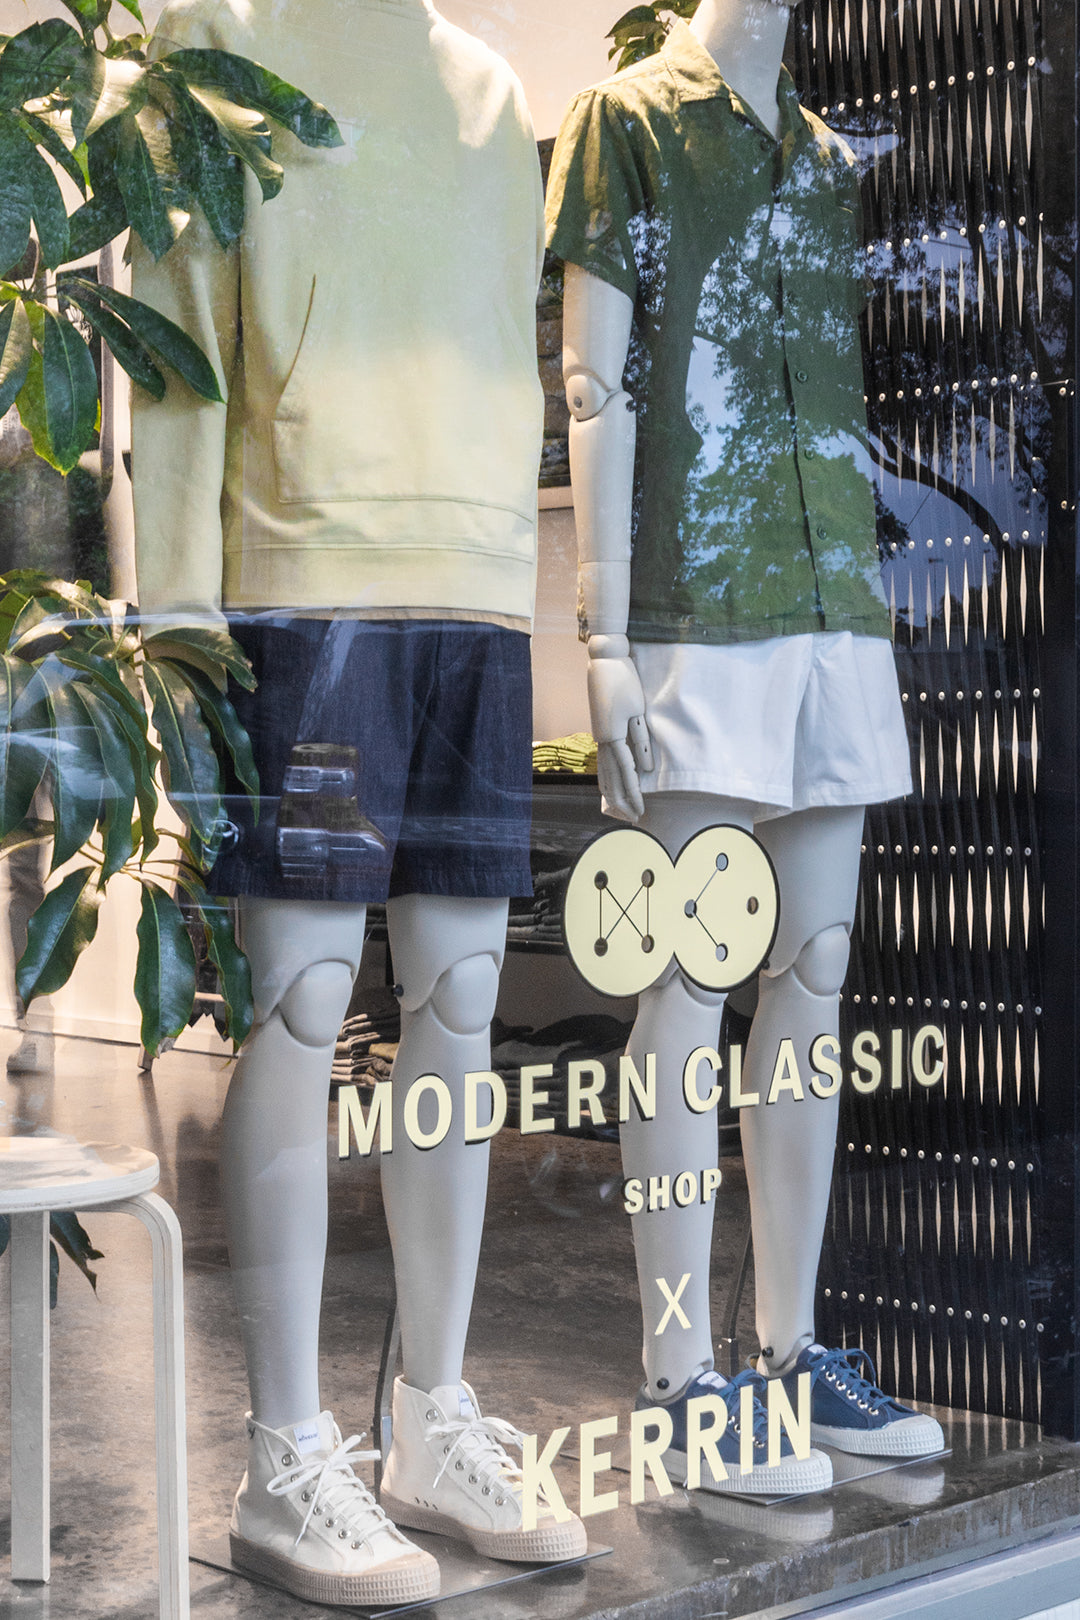 Modern Classic Shop Kerrin Windows